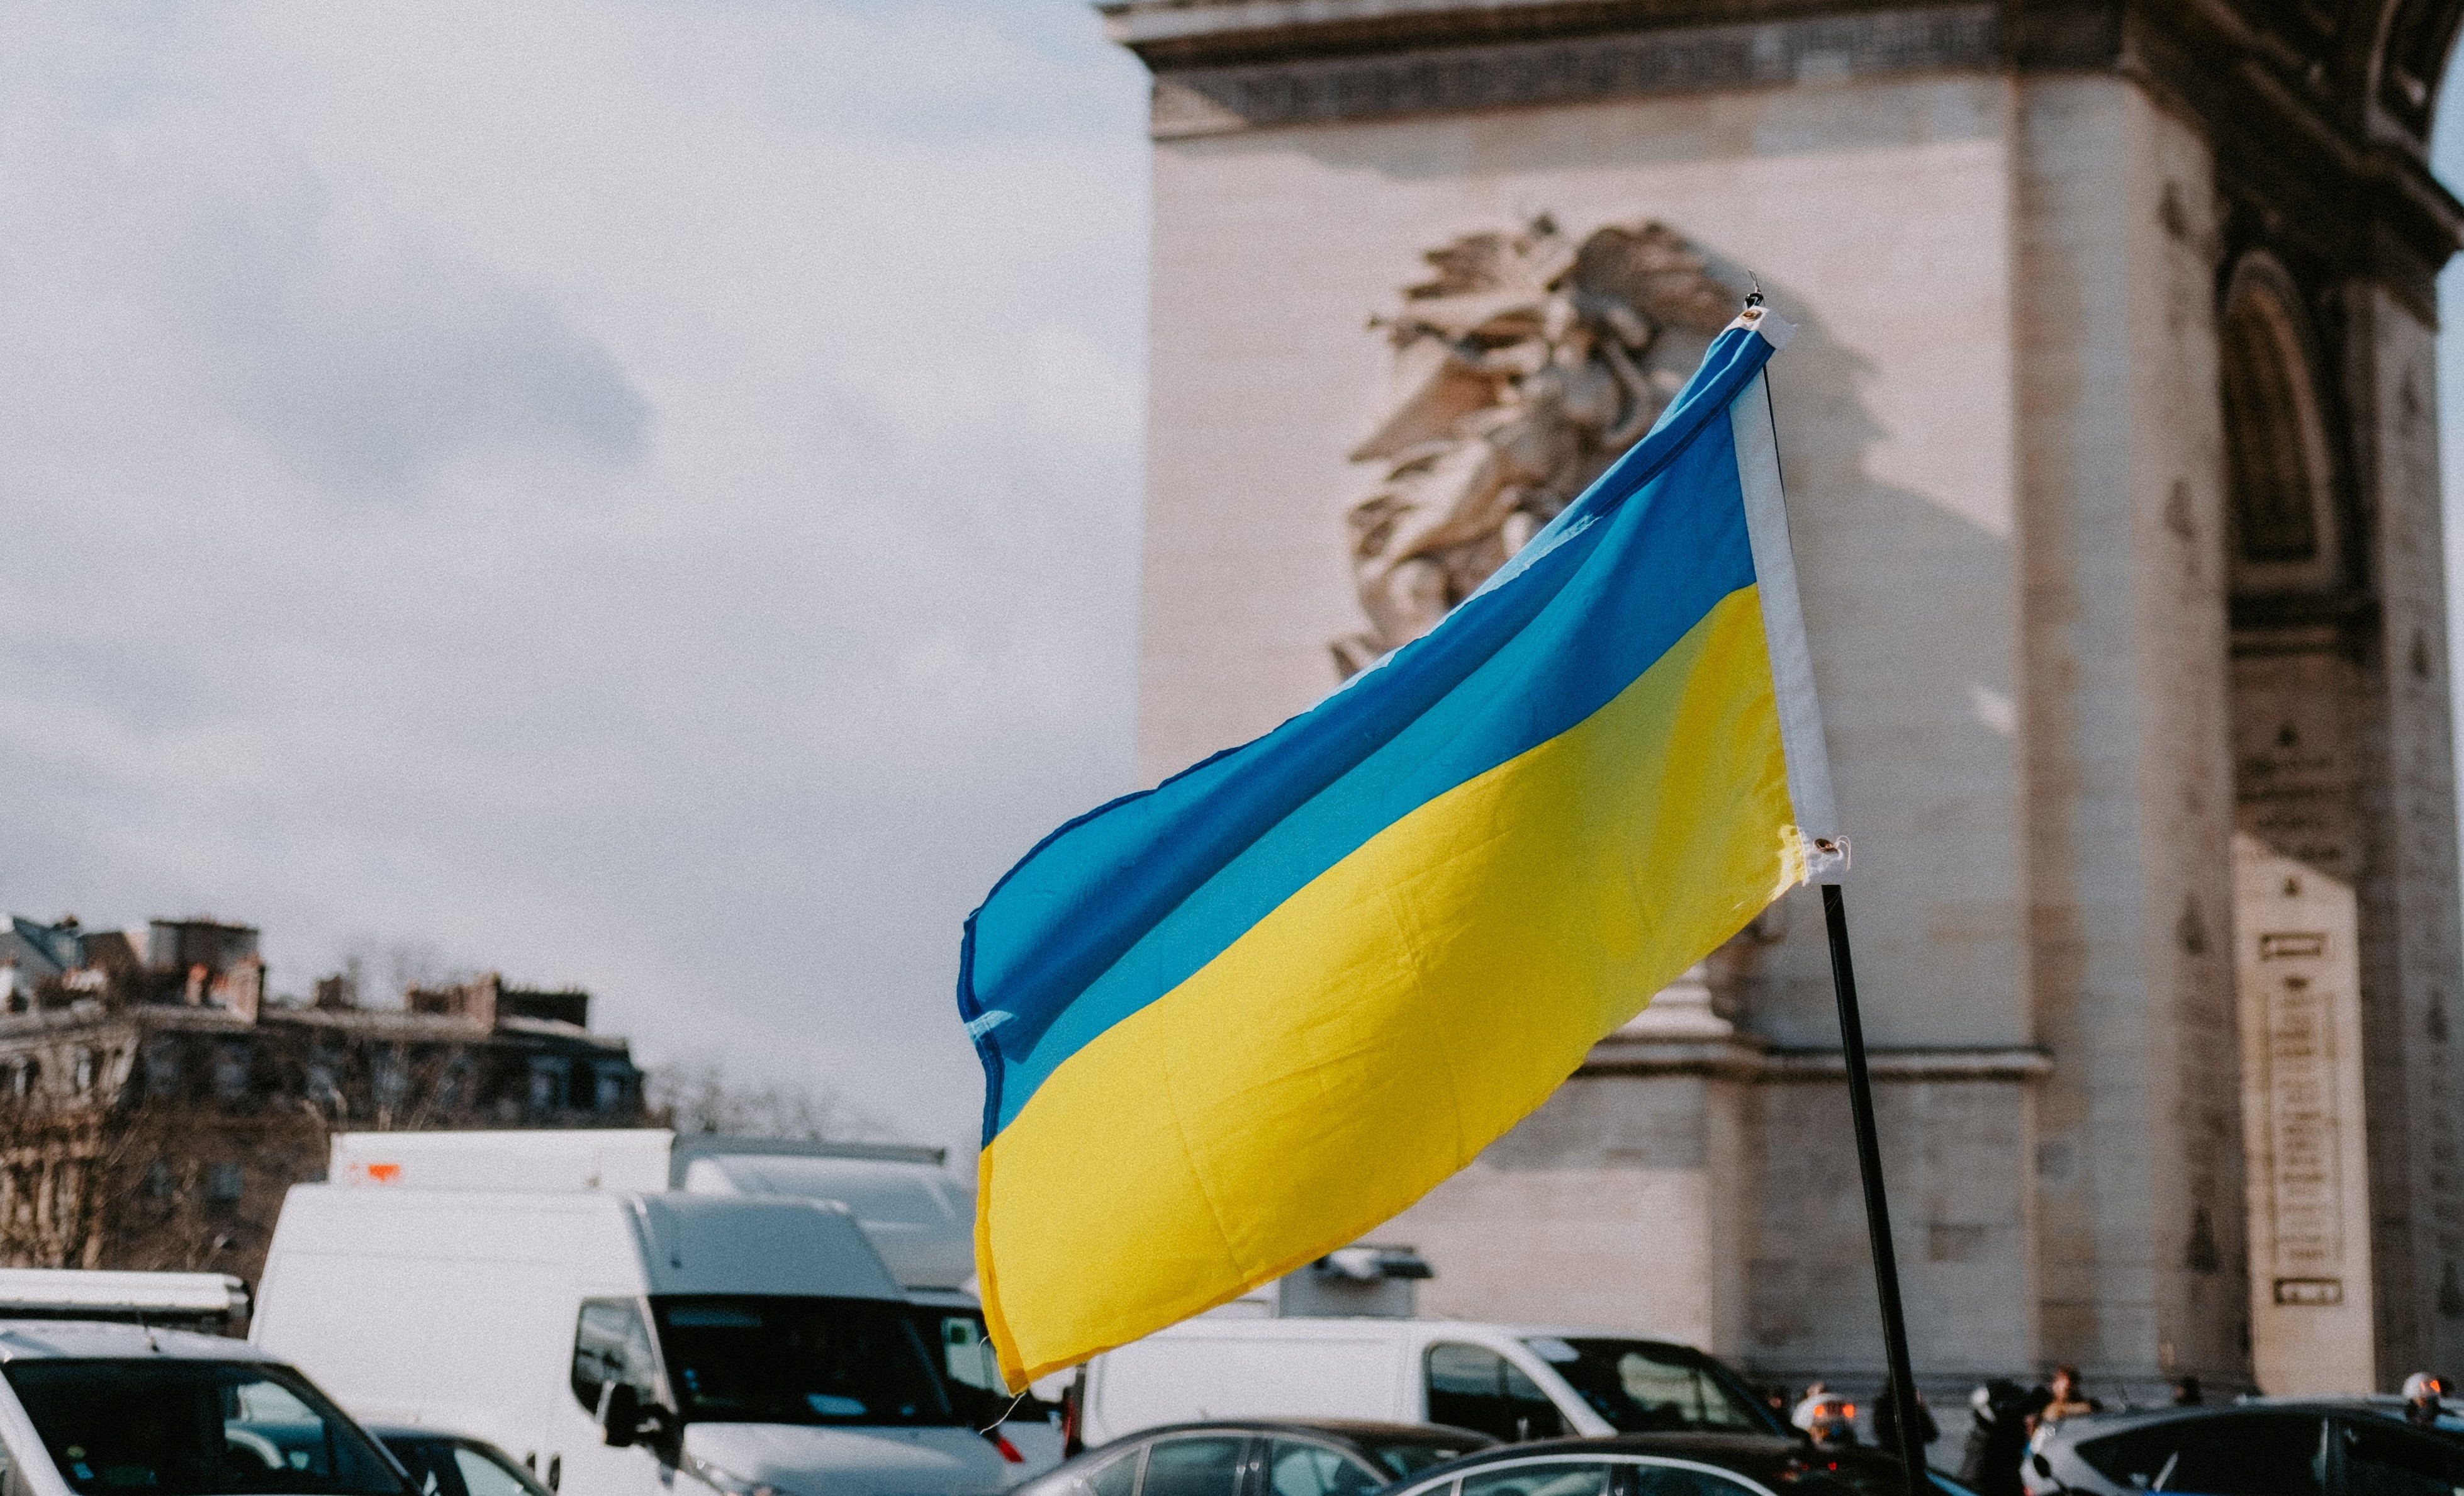 A Ukrainian flag. Photo by Mathias P.R. Reding from Pexels